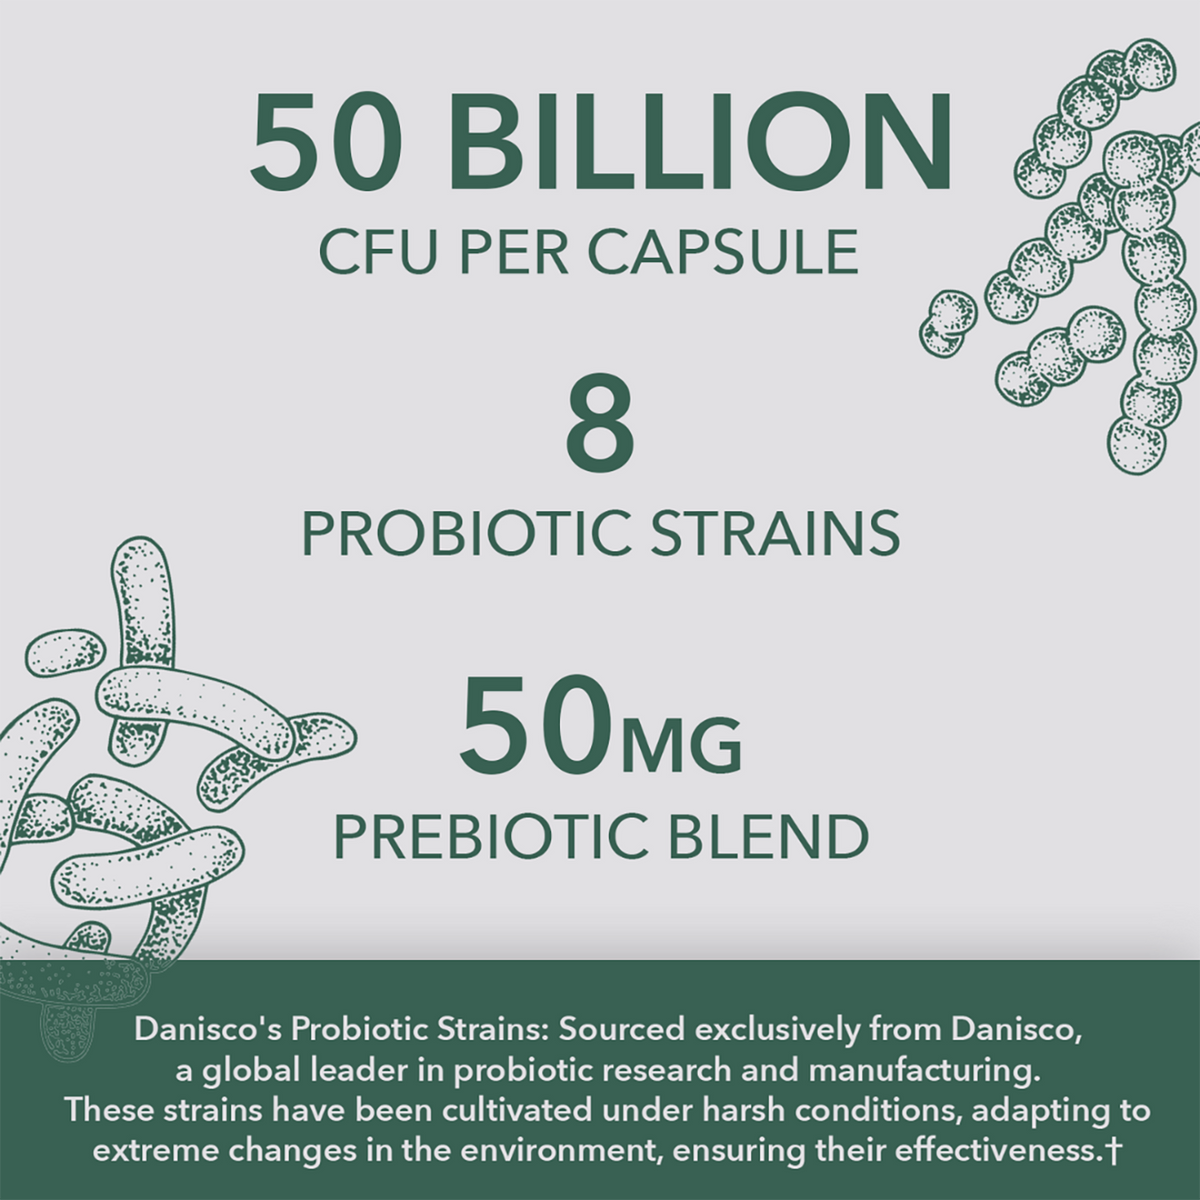 Vegan Women’s Probiotic 50 Billion CFU, 8 Strains